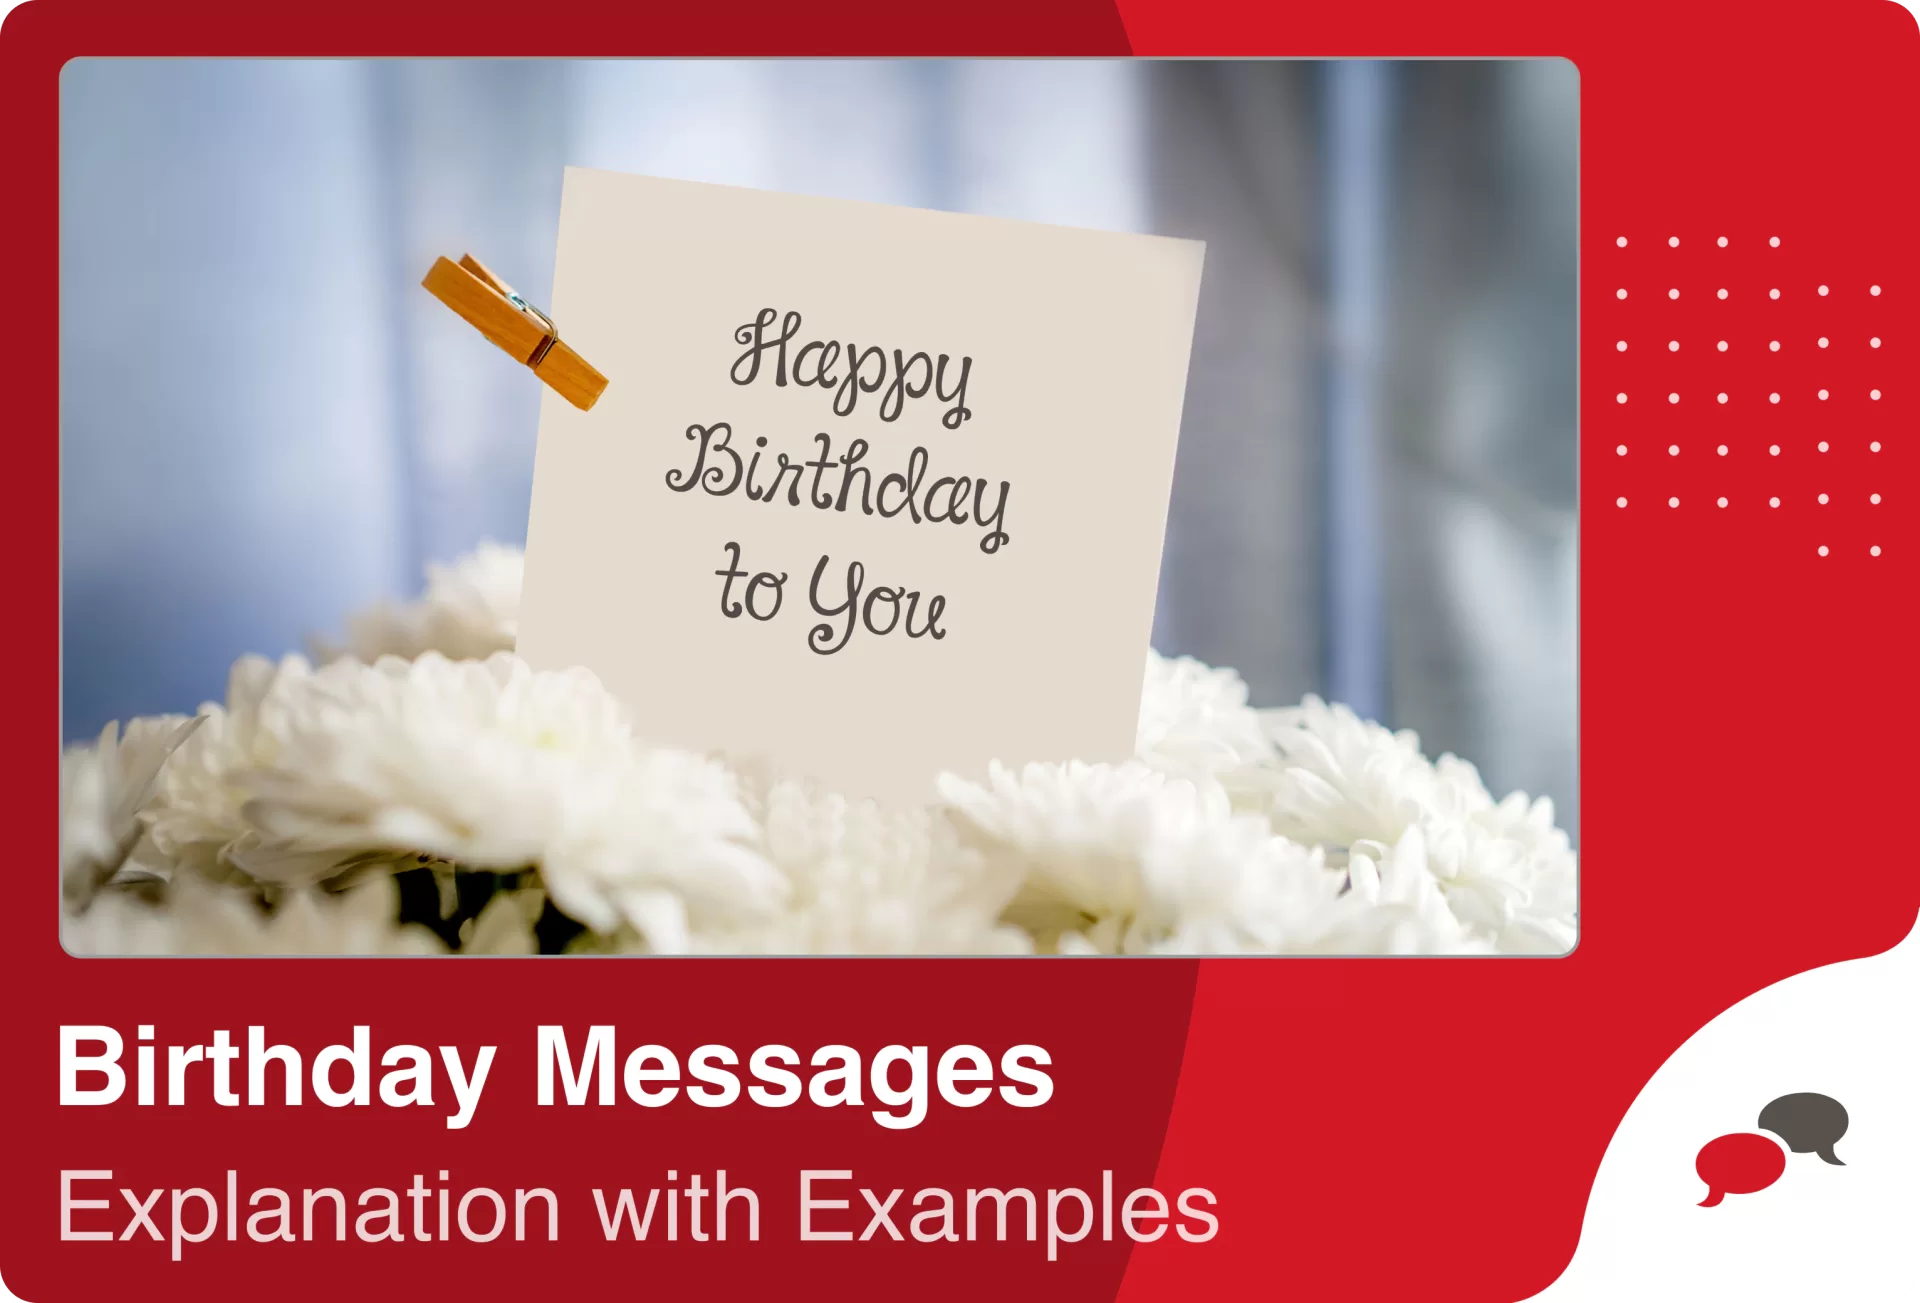 Birthday Messages.webp